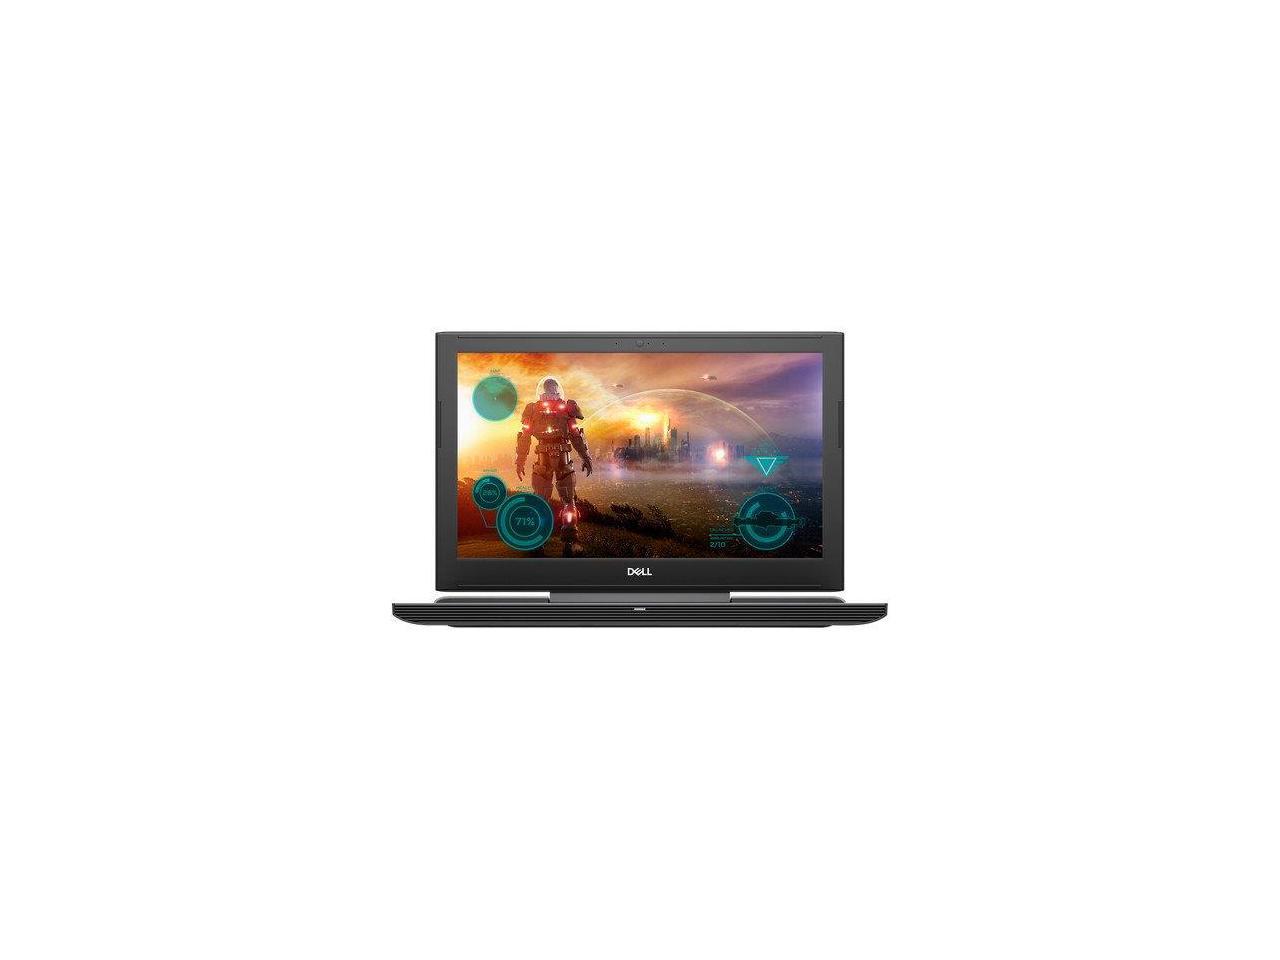 Dell Inspiron 7000 15.6" IPS FHD Gaming Laptop | VR Ready | Intel Quad Core i5-7300HQ | 16GB RAM 512GB SSD | NVIDIA GeForce GTX 1060 6GB GDDR5 | Windows 10 Black